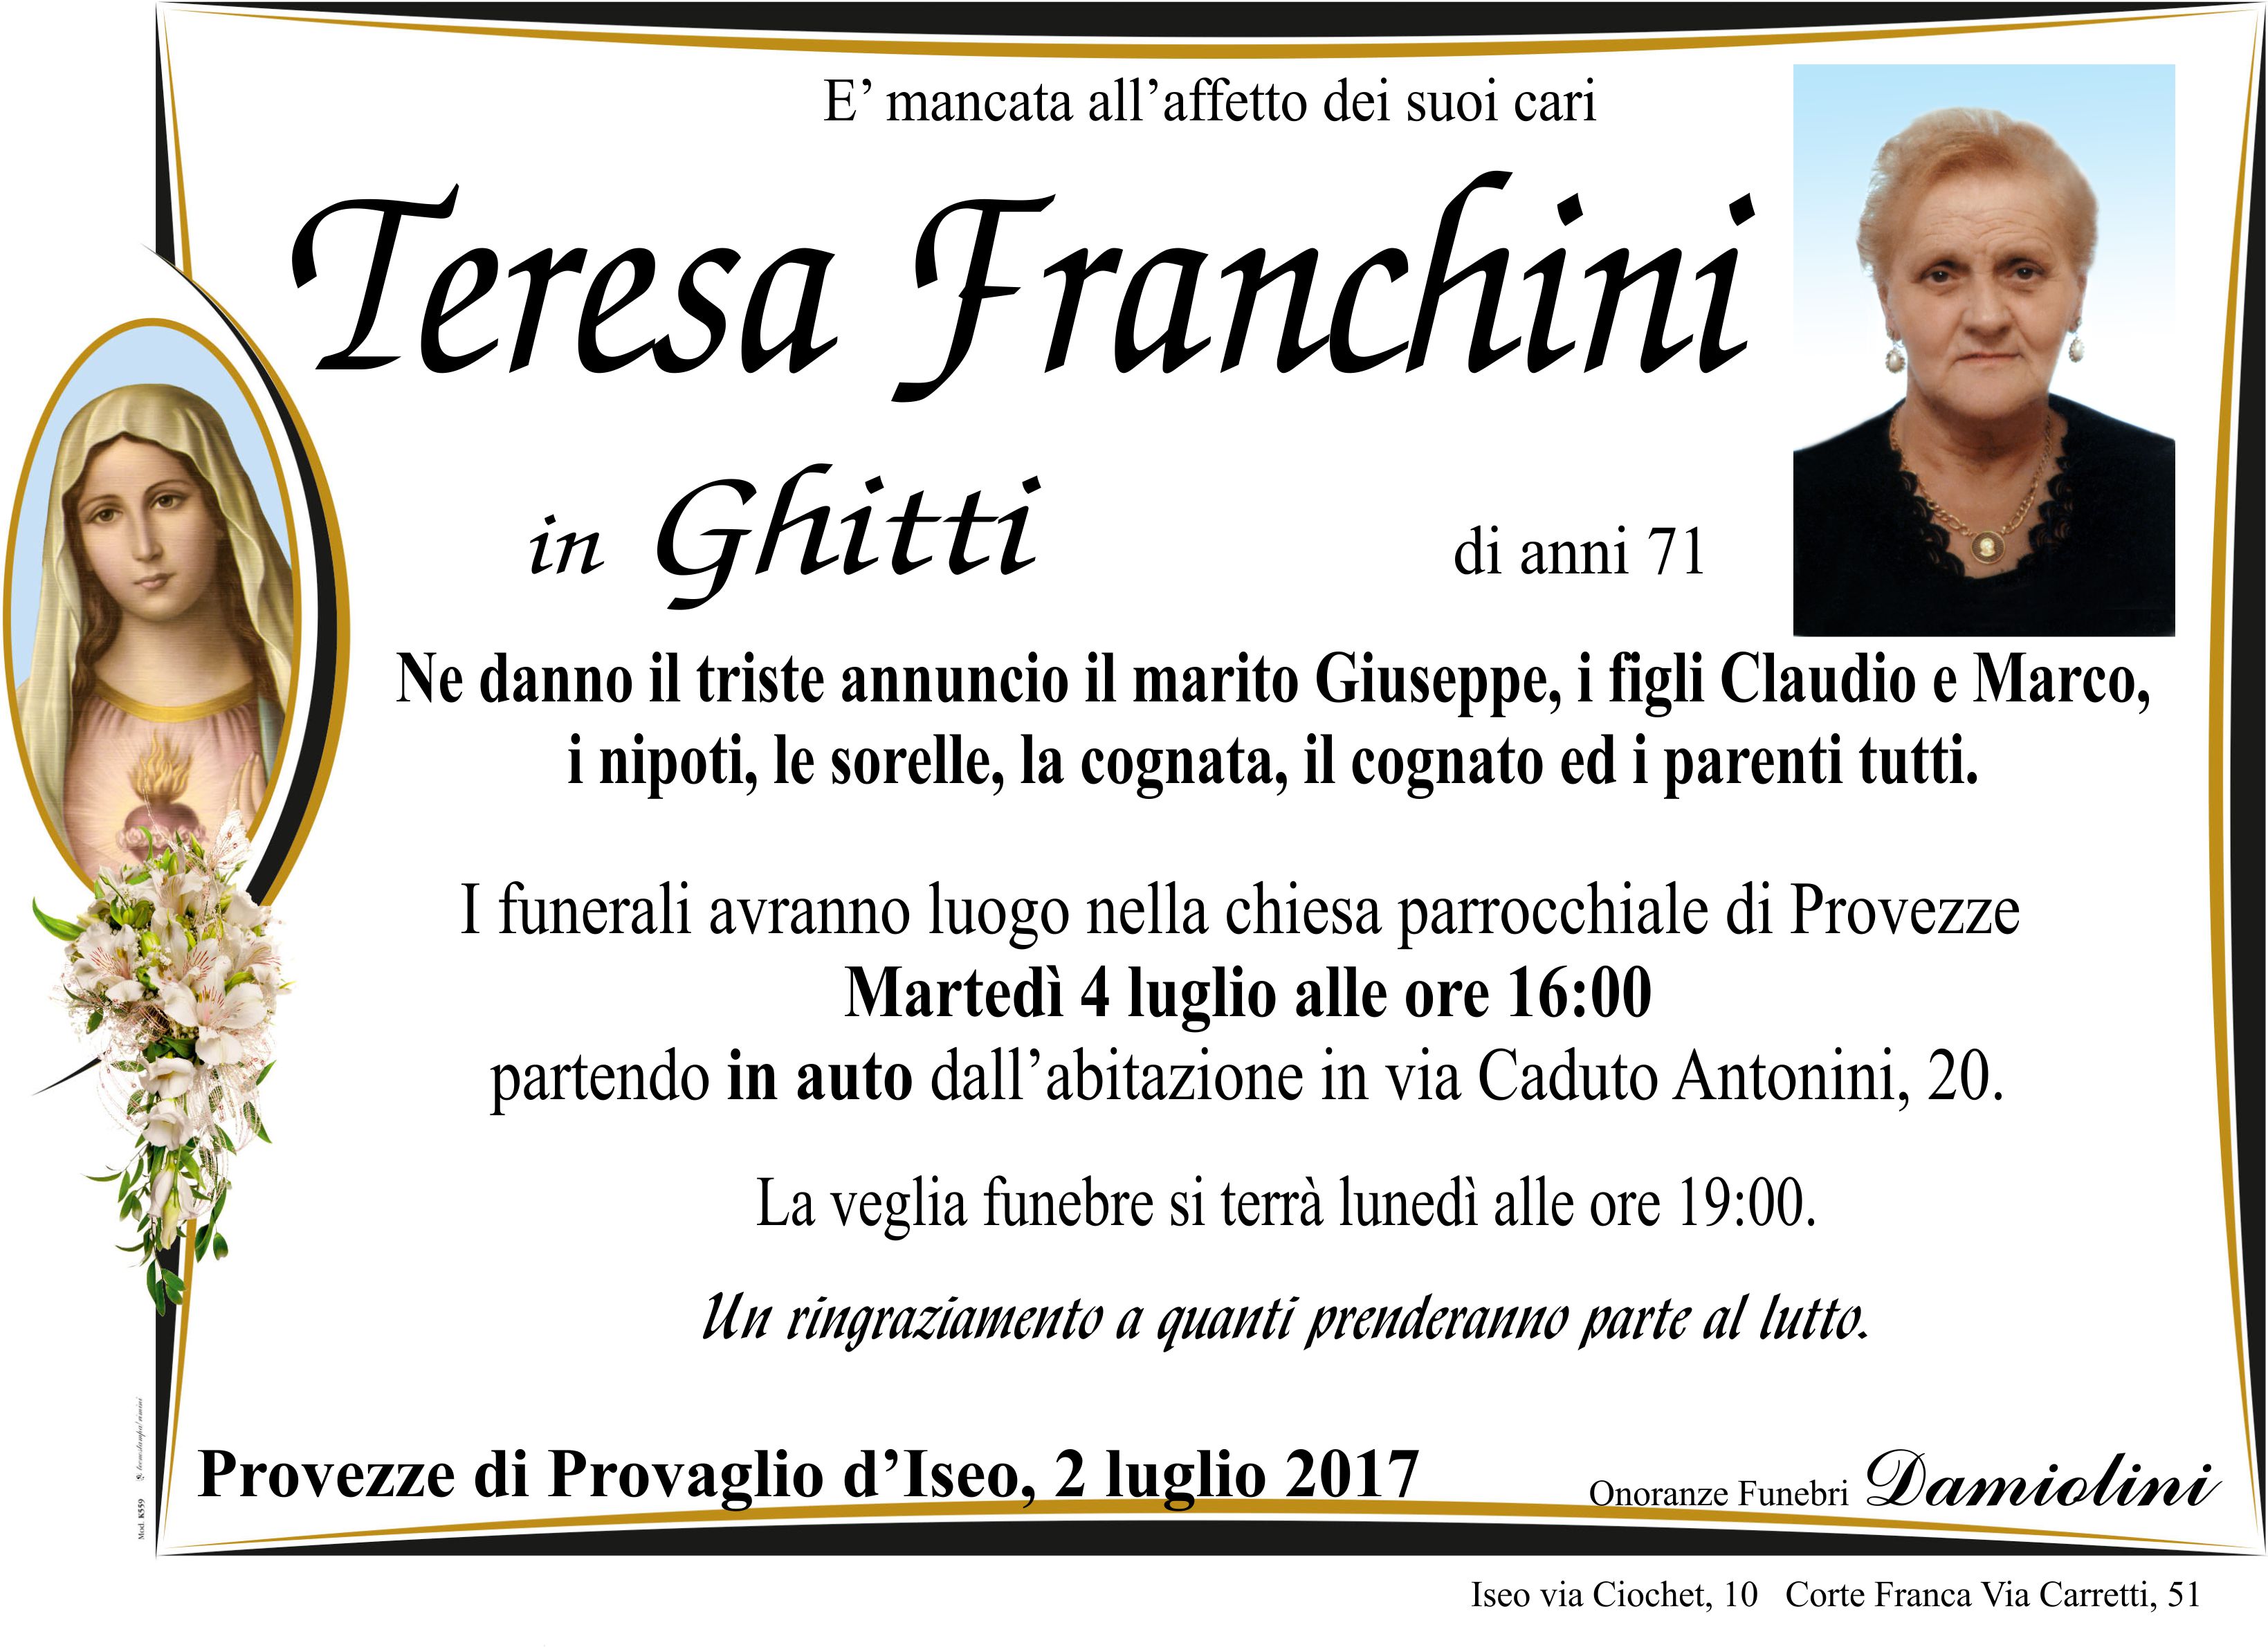 Onoranze Funebri Damiolini Sig.ra Teresa Franchini